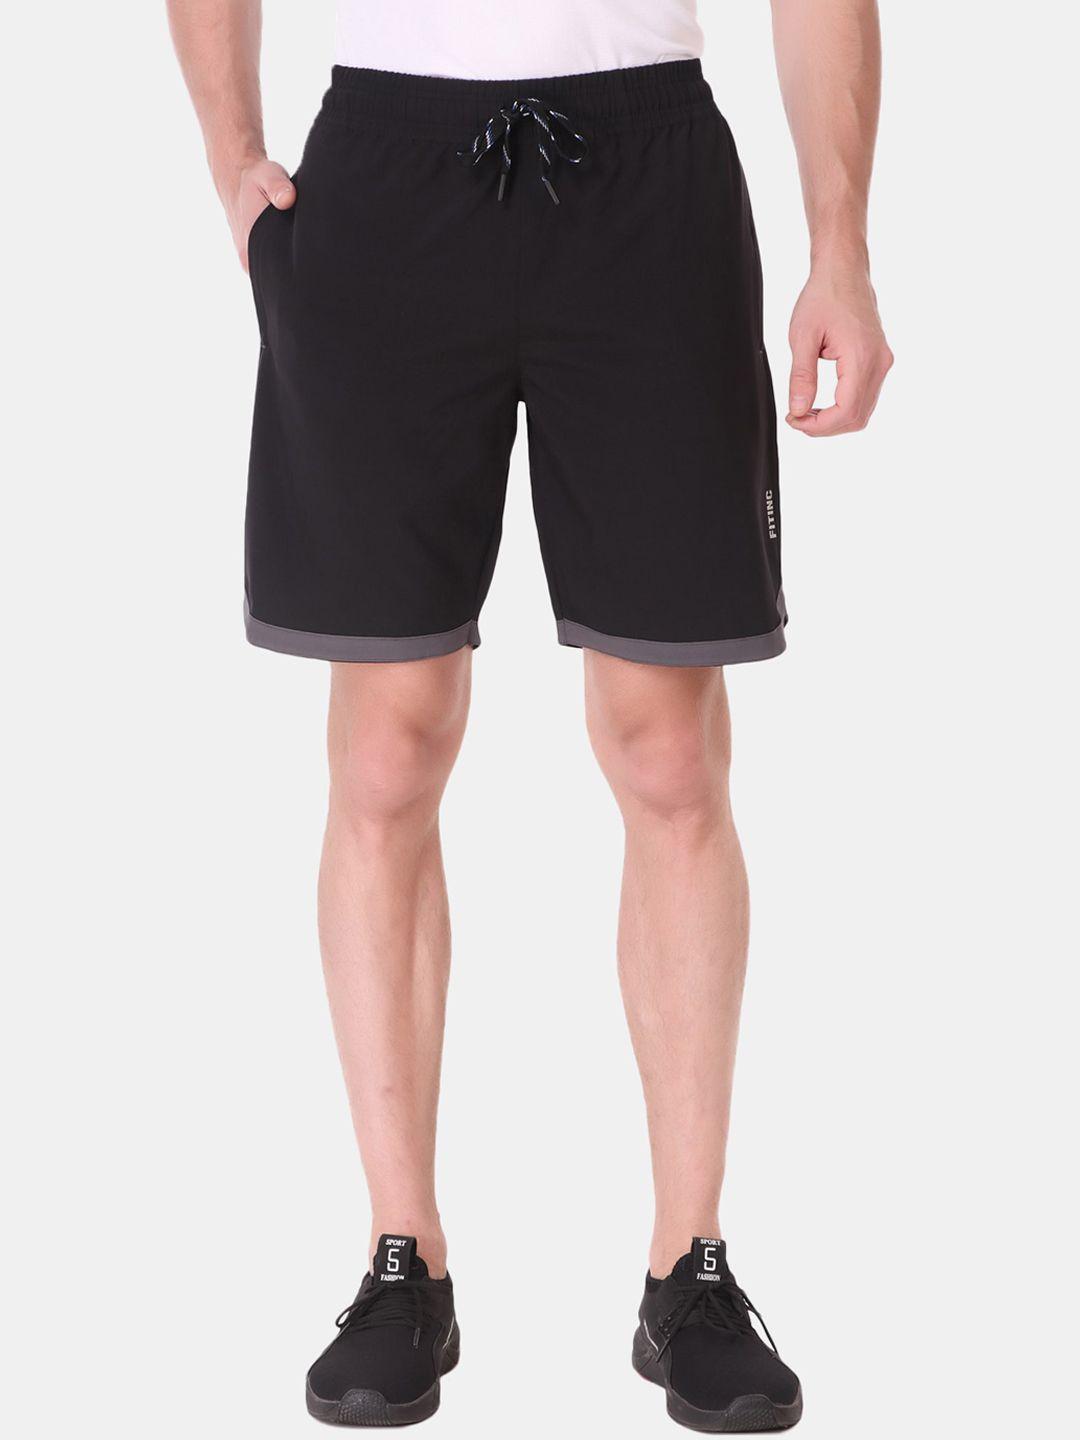 fitinc men black colourblocked running sports shorts